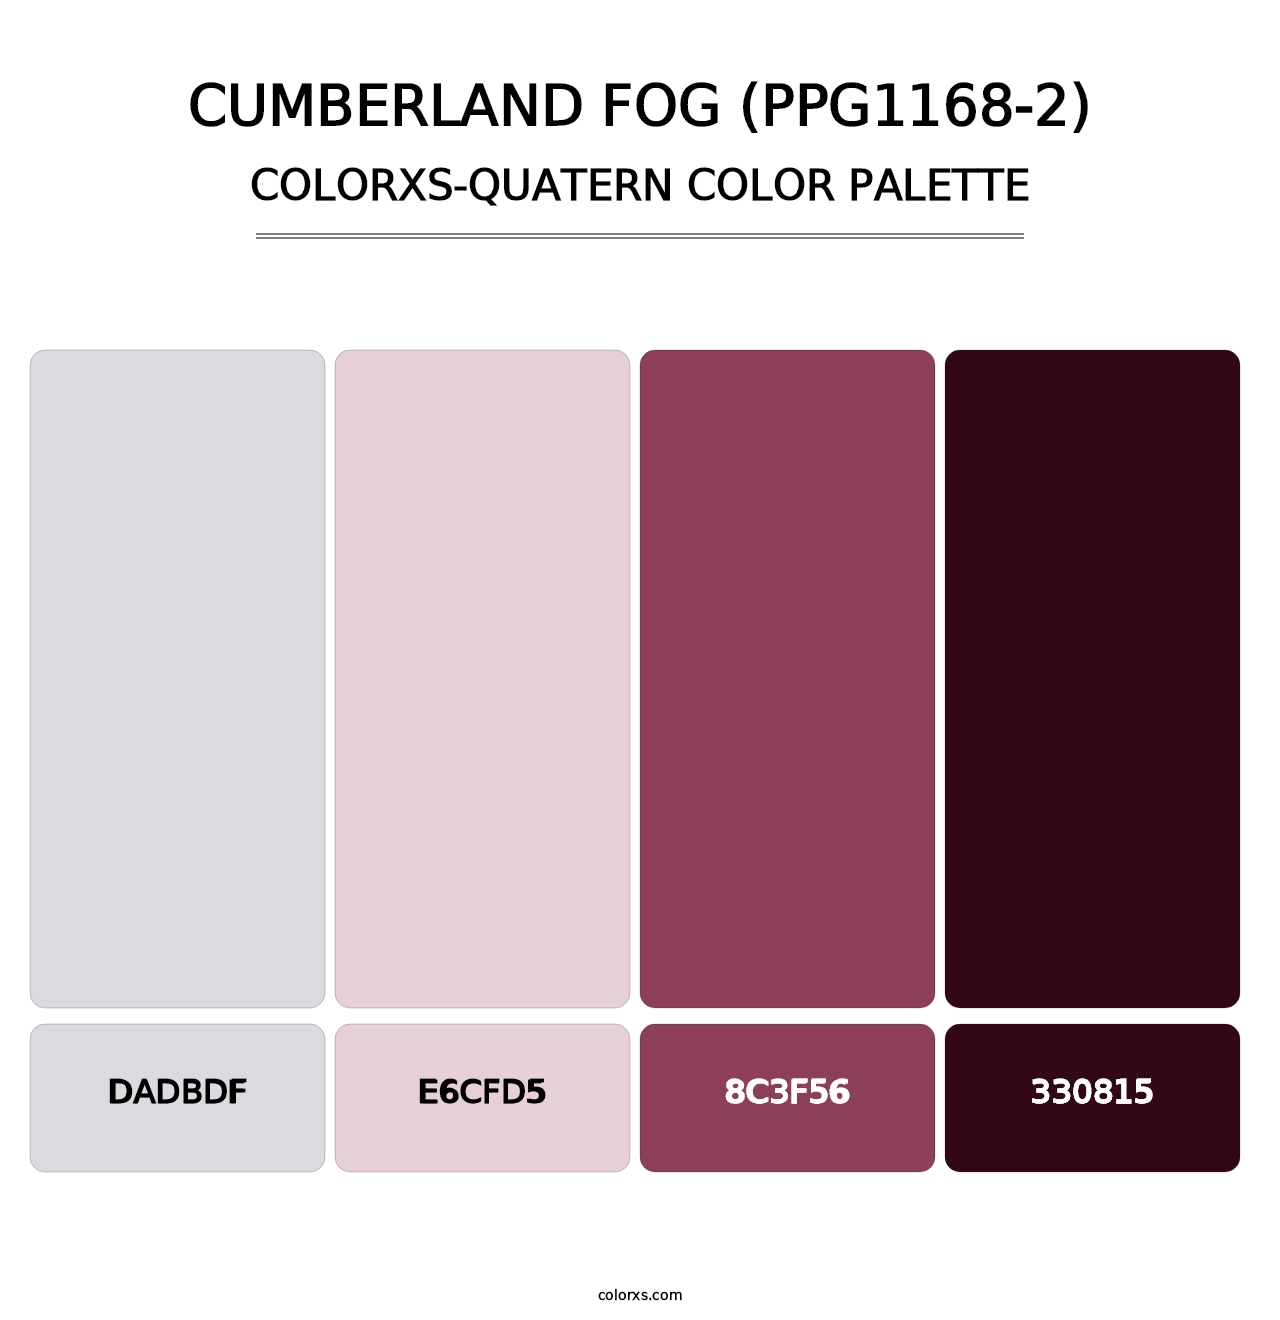 Cumberland Fog (PPG1168-2) - Colorxs Quatern Palette